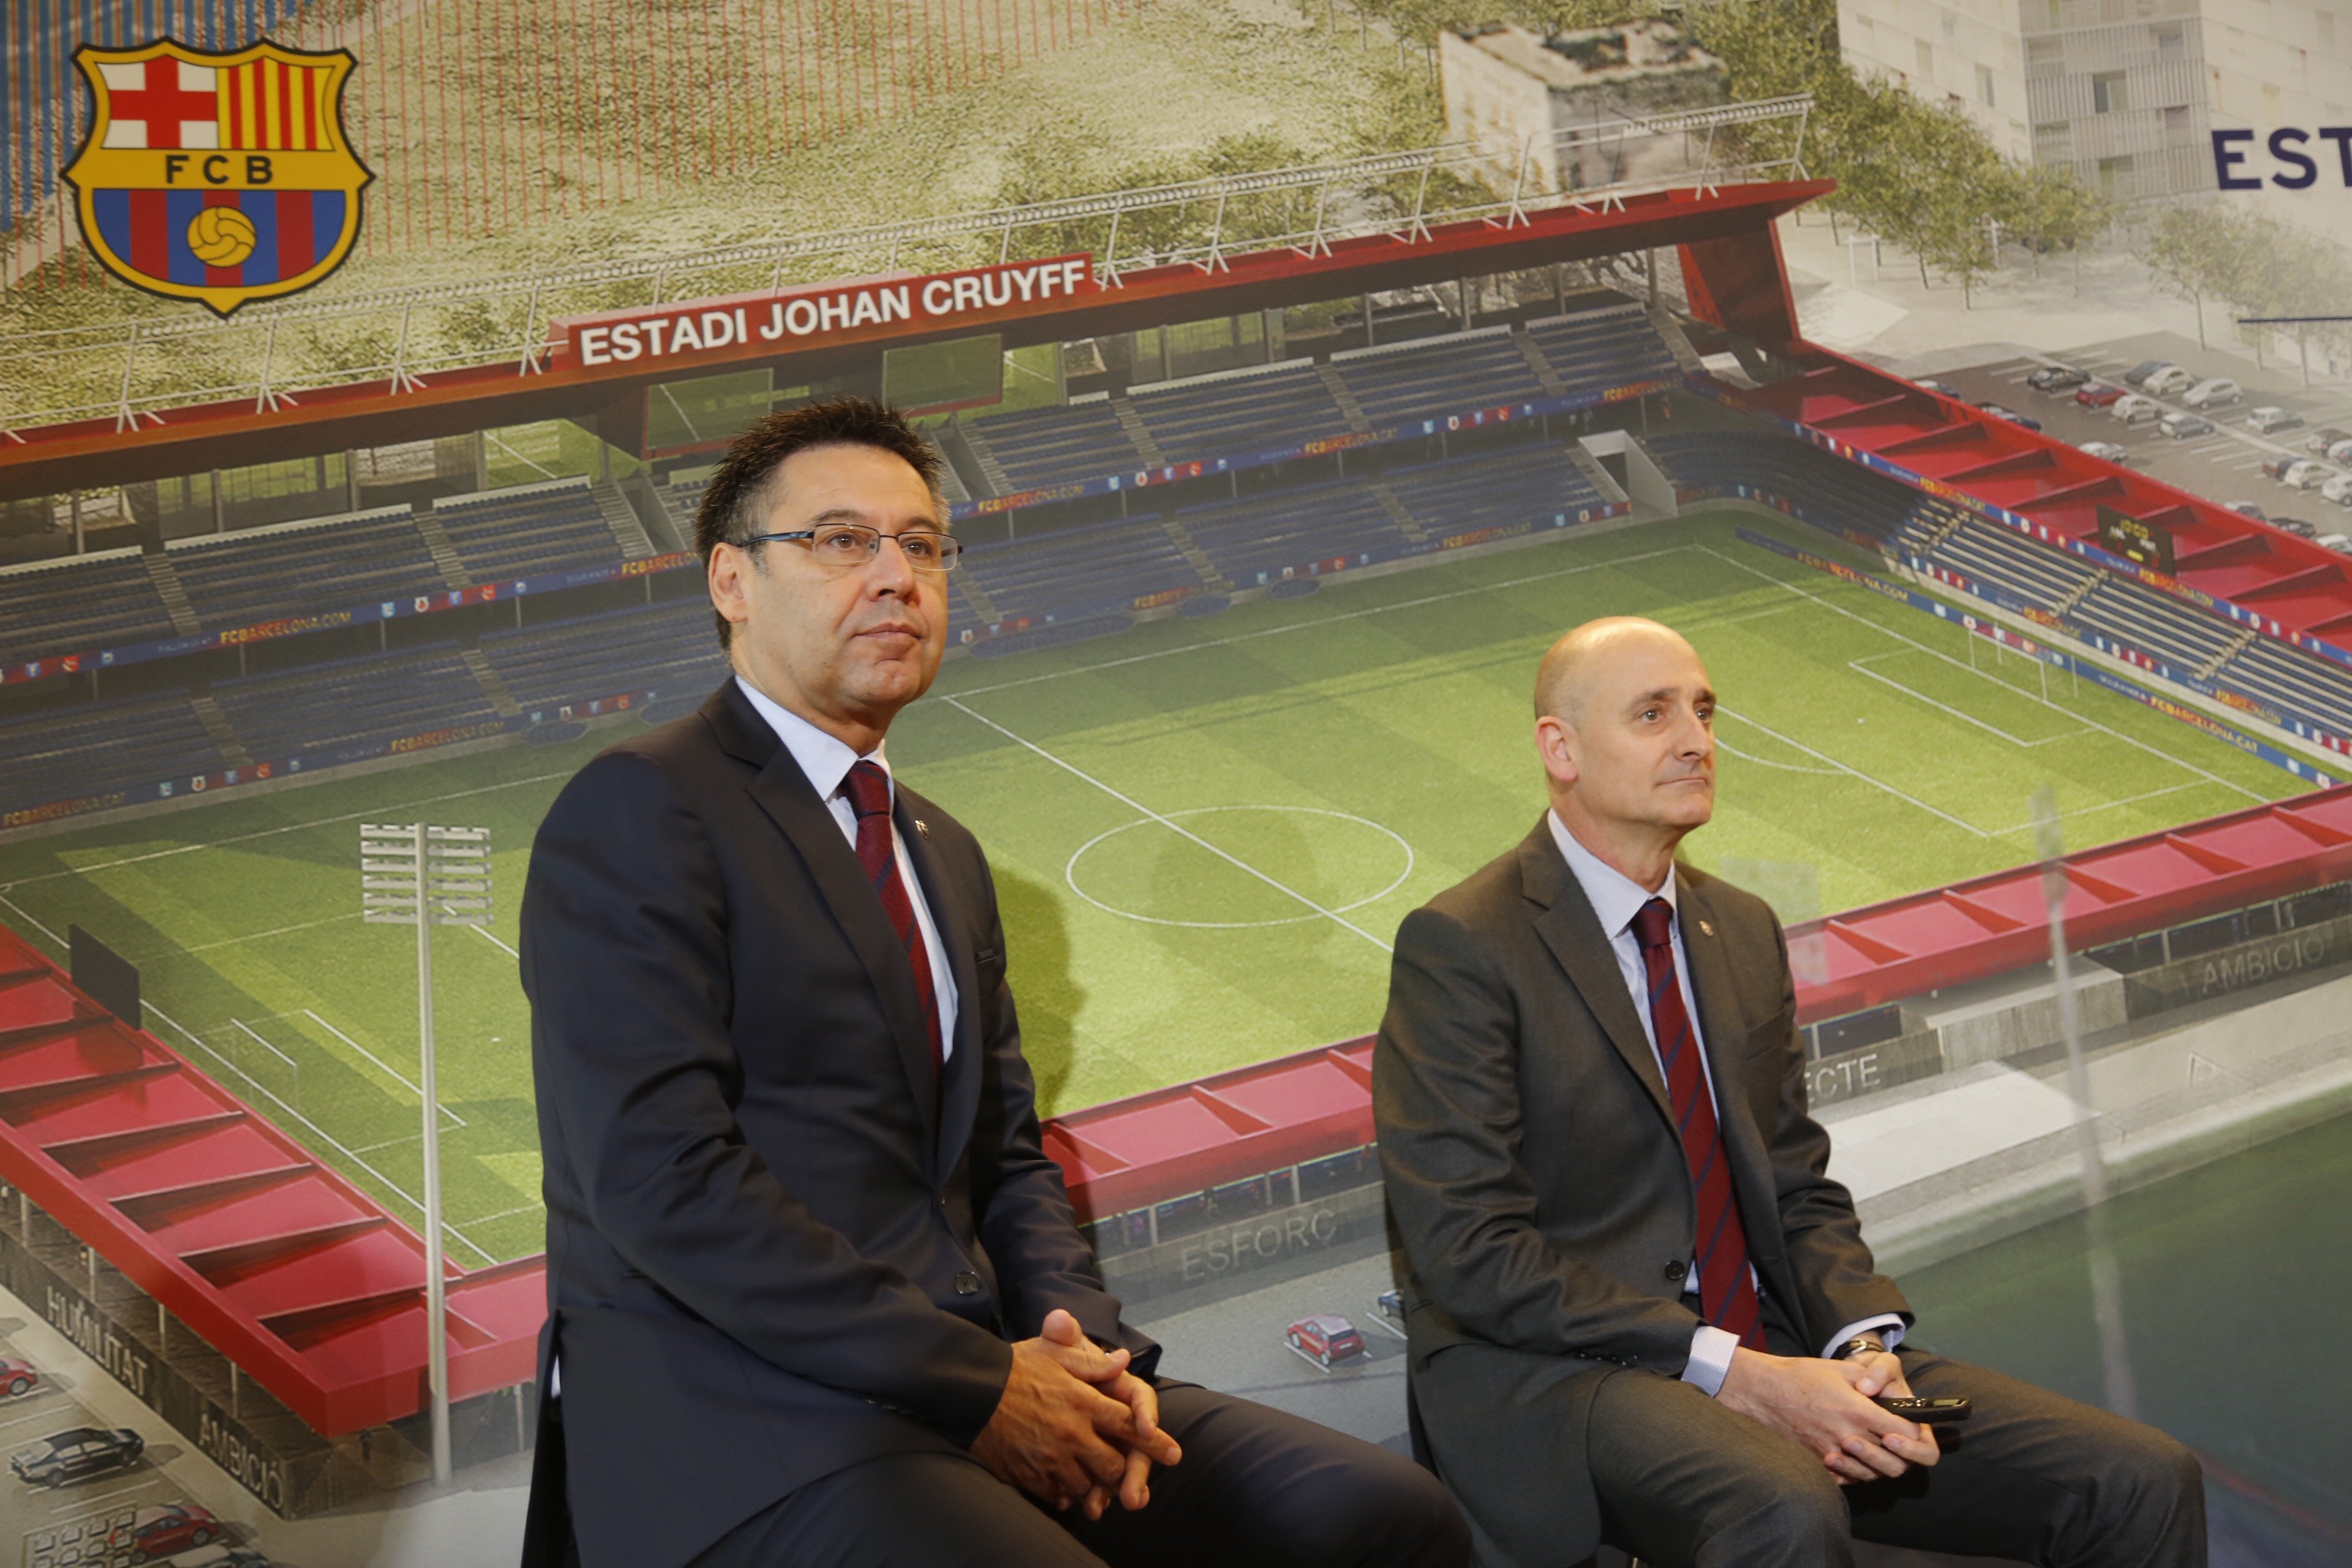 El Barça espera inaugurar l’estadi Johan Cruyff durant la temporada 2018/19